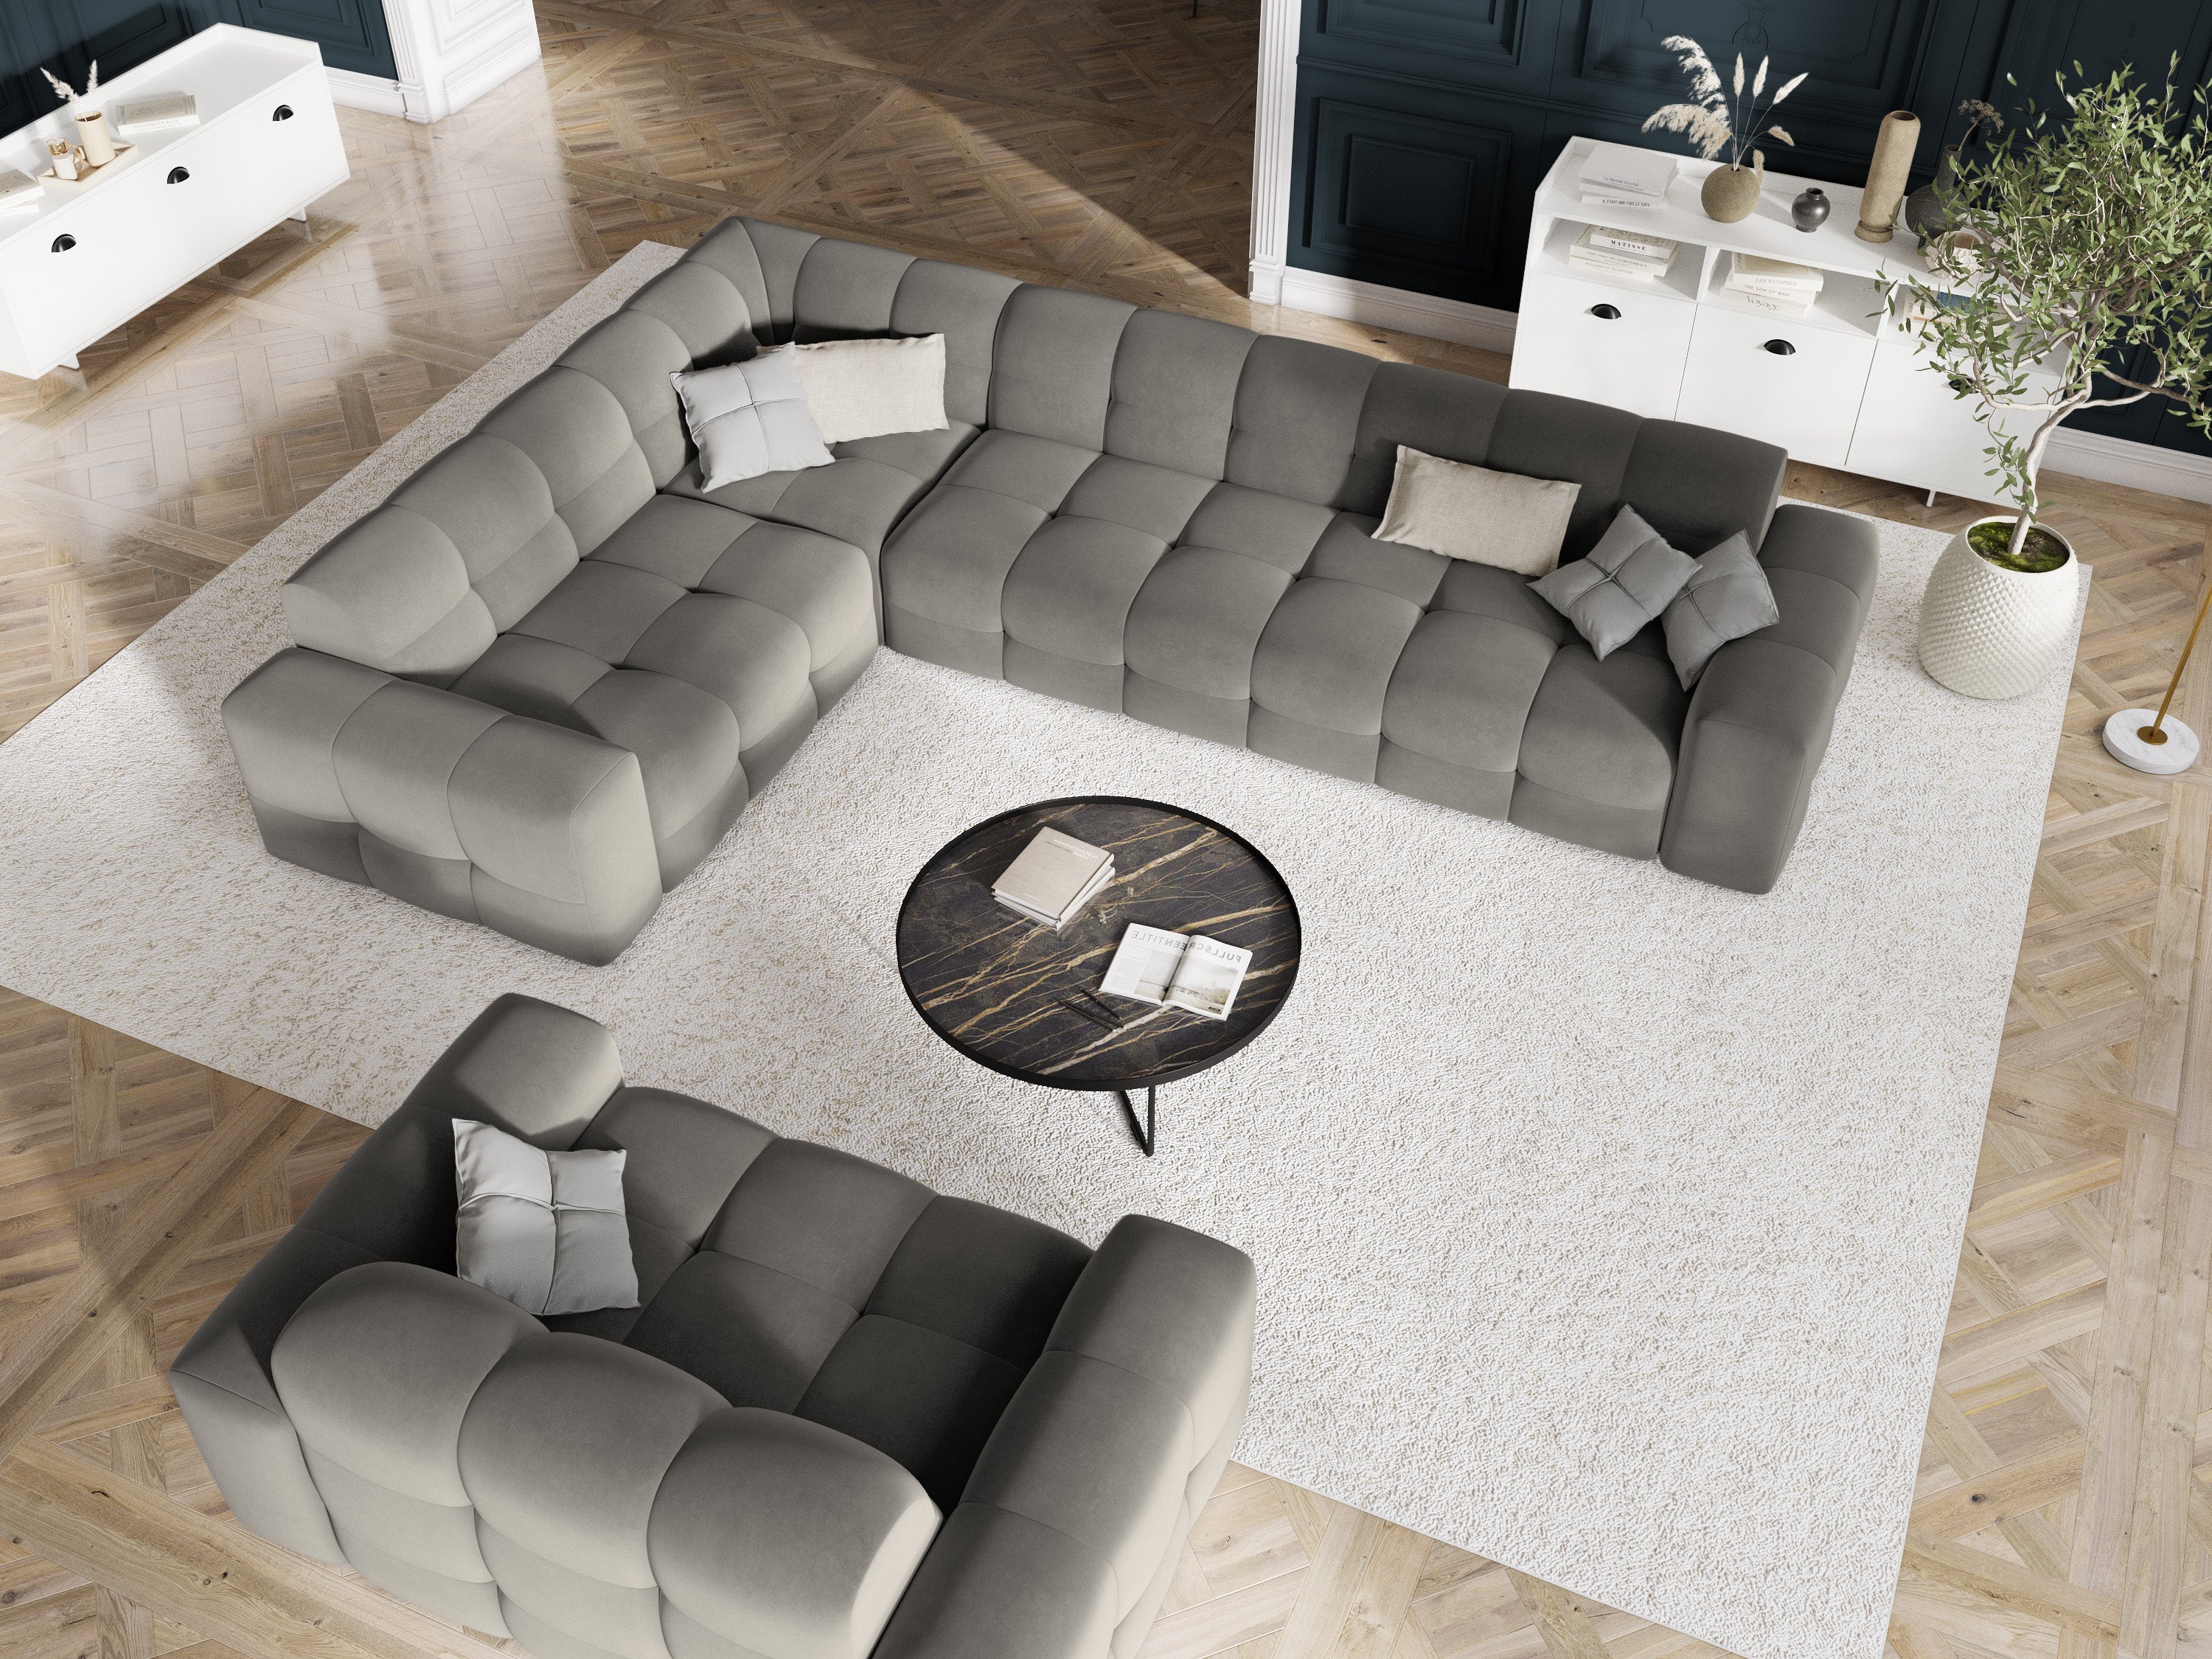 Sofa aksamitna 2-osobowa KENDAL szary, Micadoni, Eye on Design